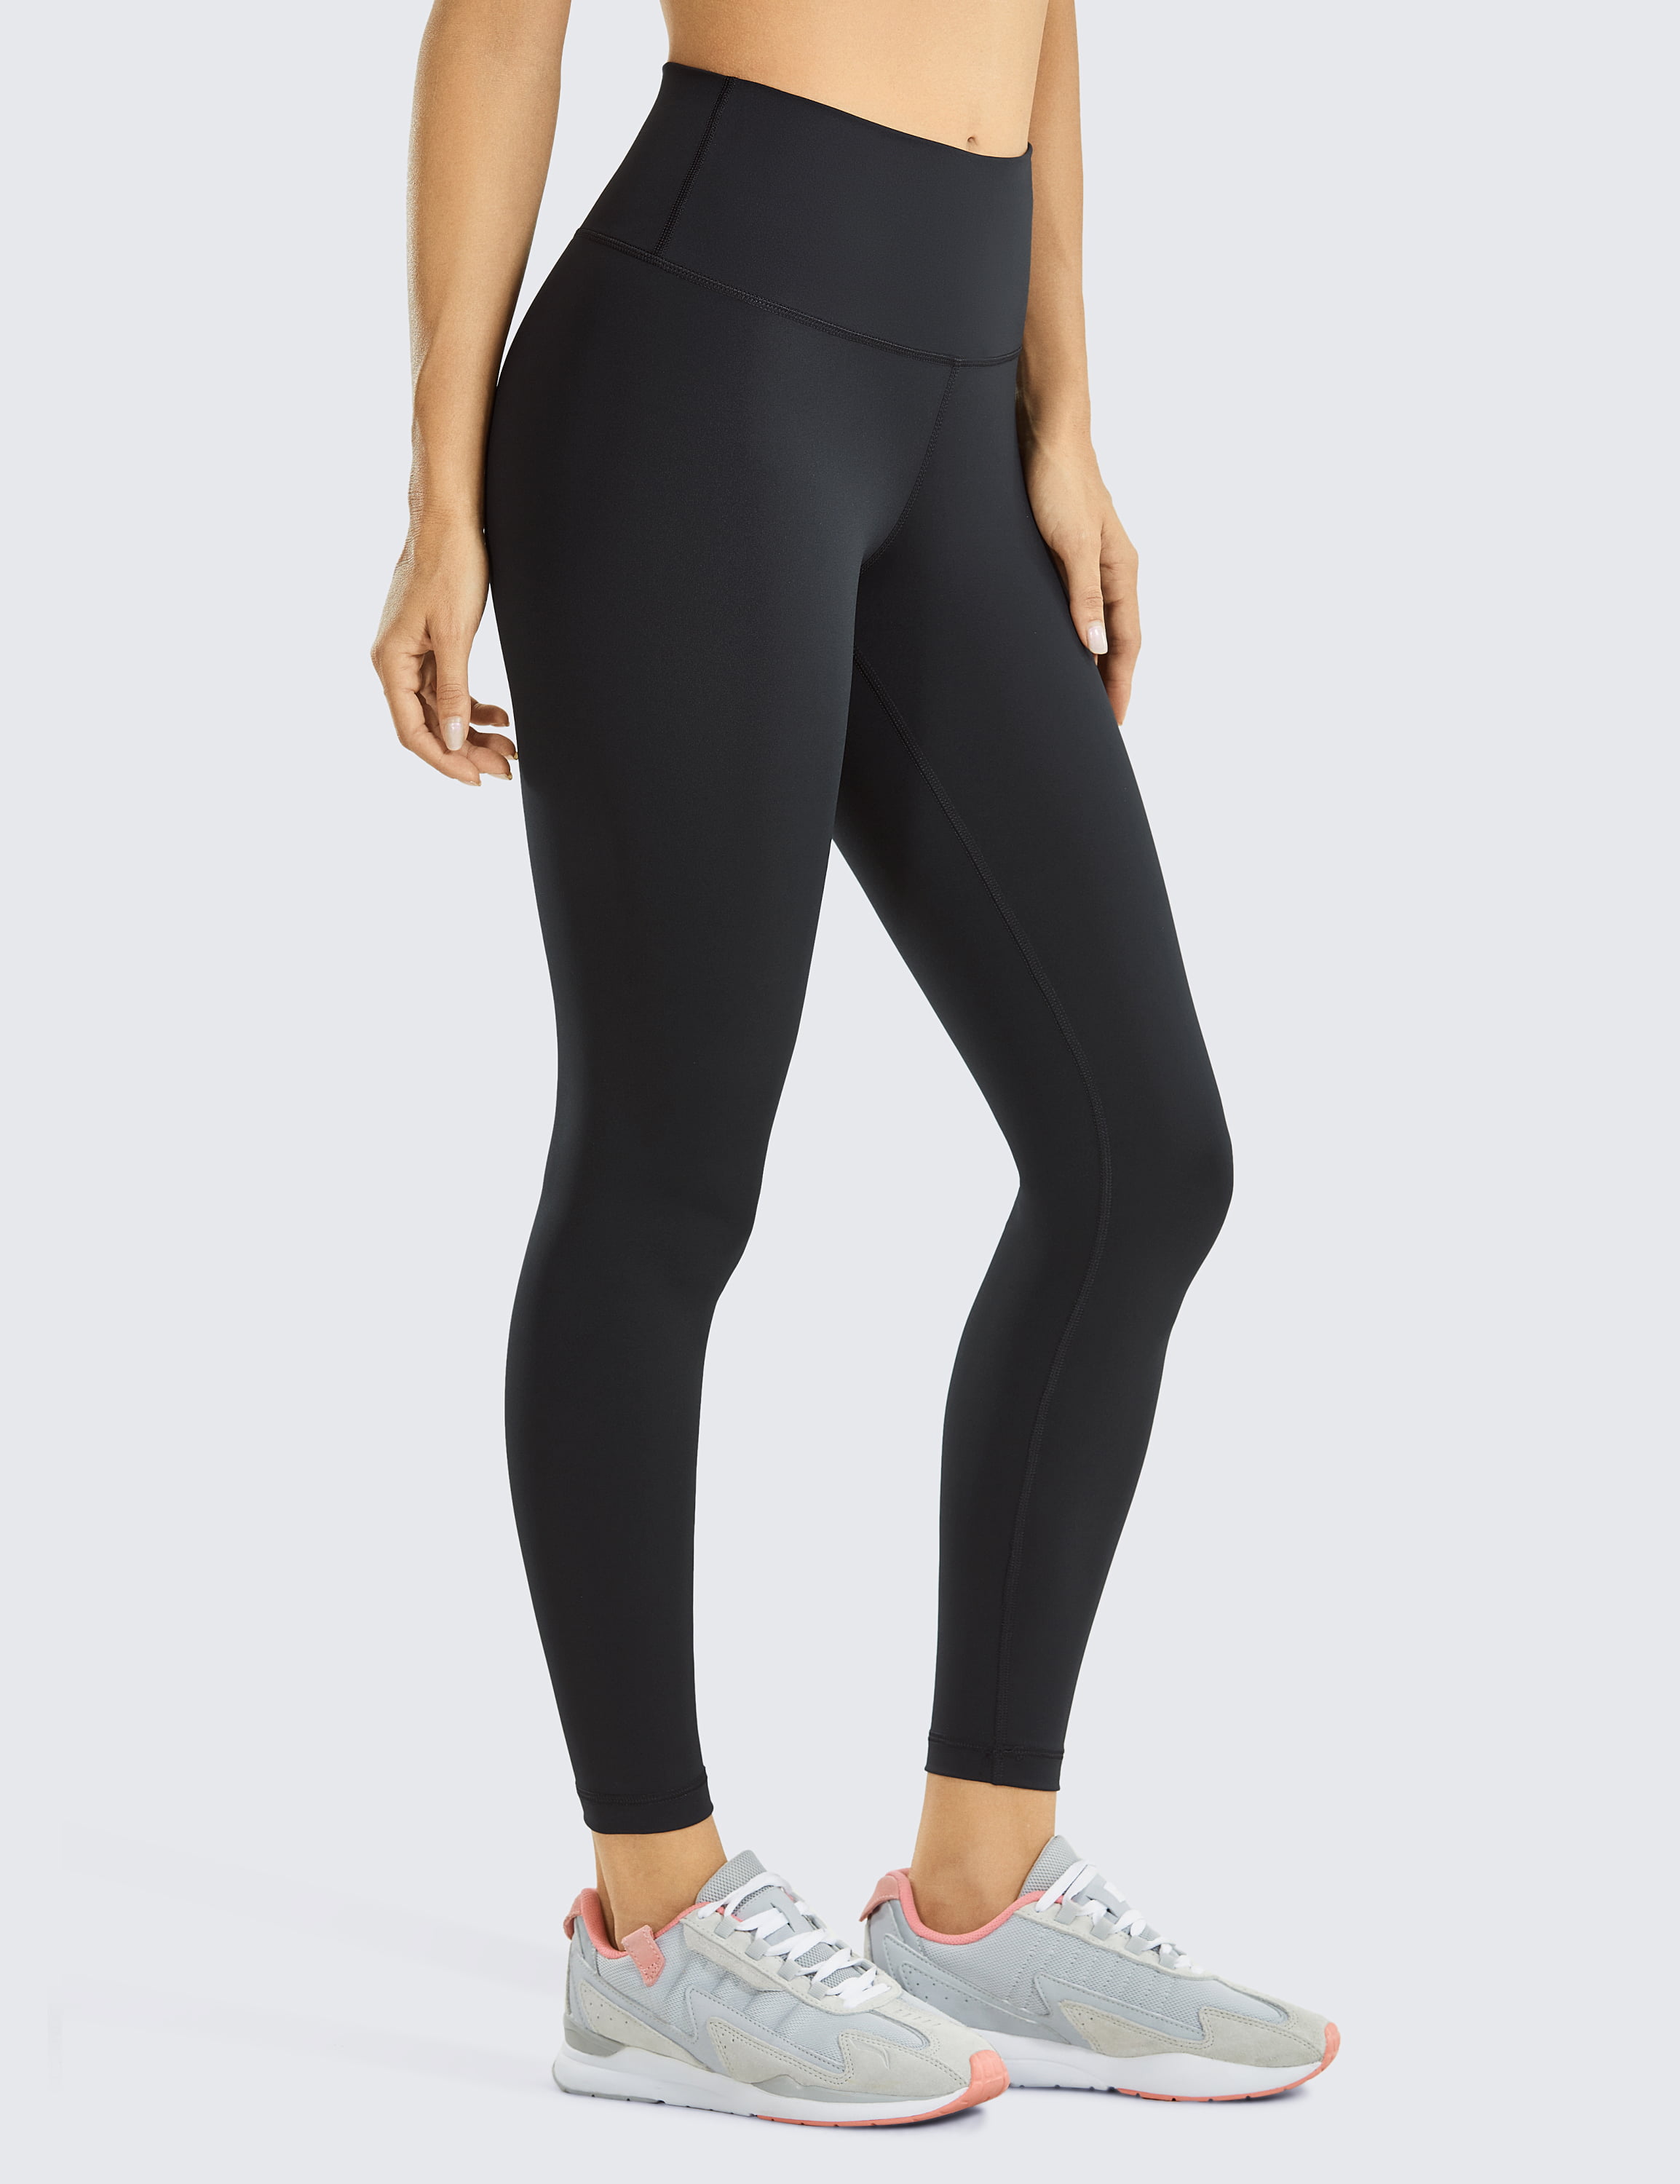 CRZ YOGA Women's Squat Proof Hugged Feeling High Waist Activewear Workout Yoga Pants Gym Leggings-28 Inches 